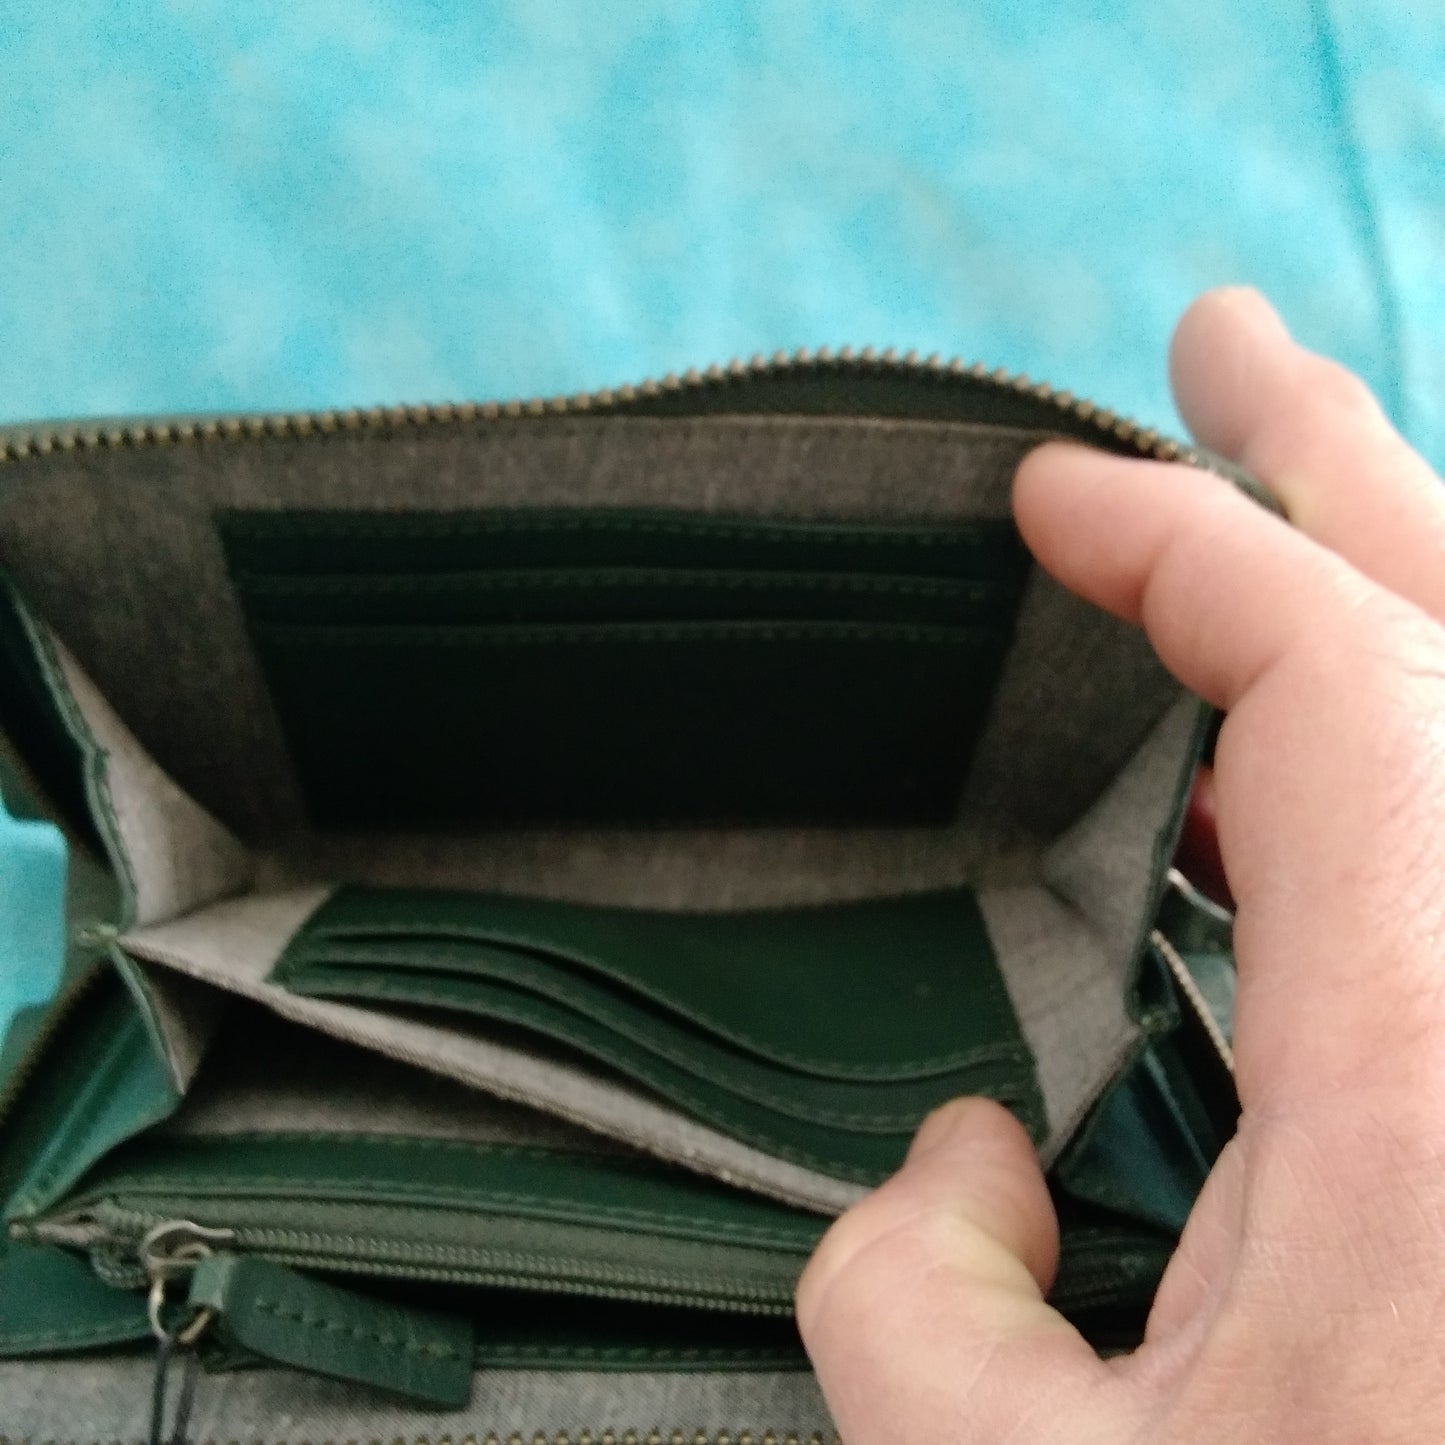 NWT - Elk Green Leather Clutch Wallet